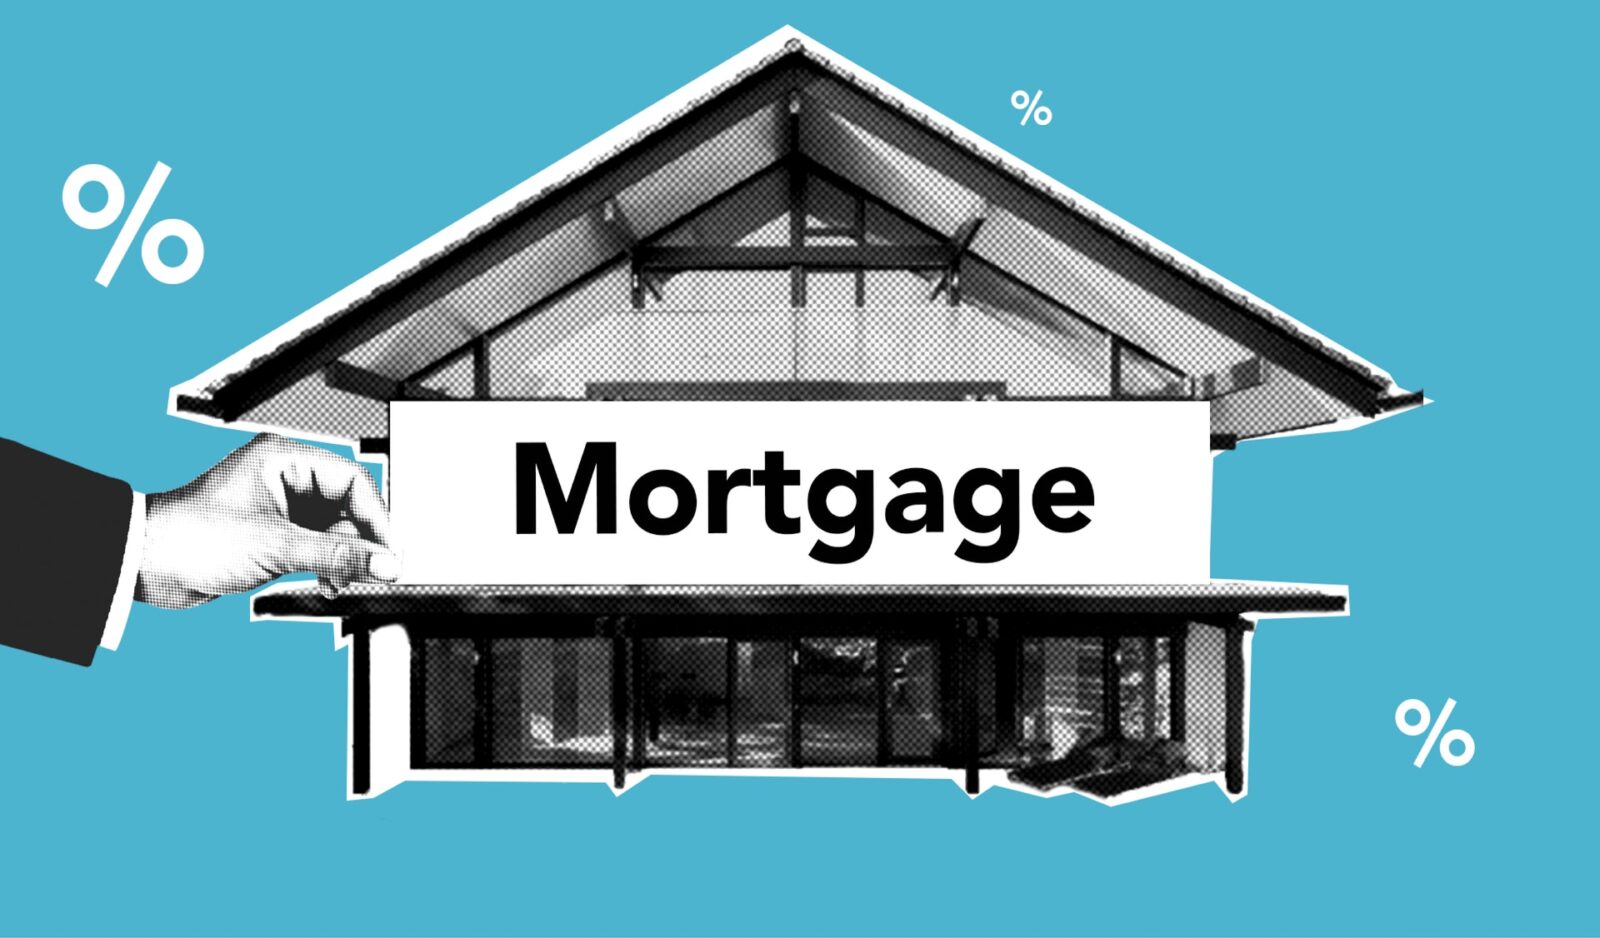 mortgage illustration on a blue background